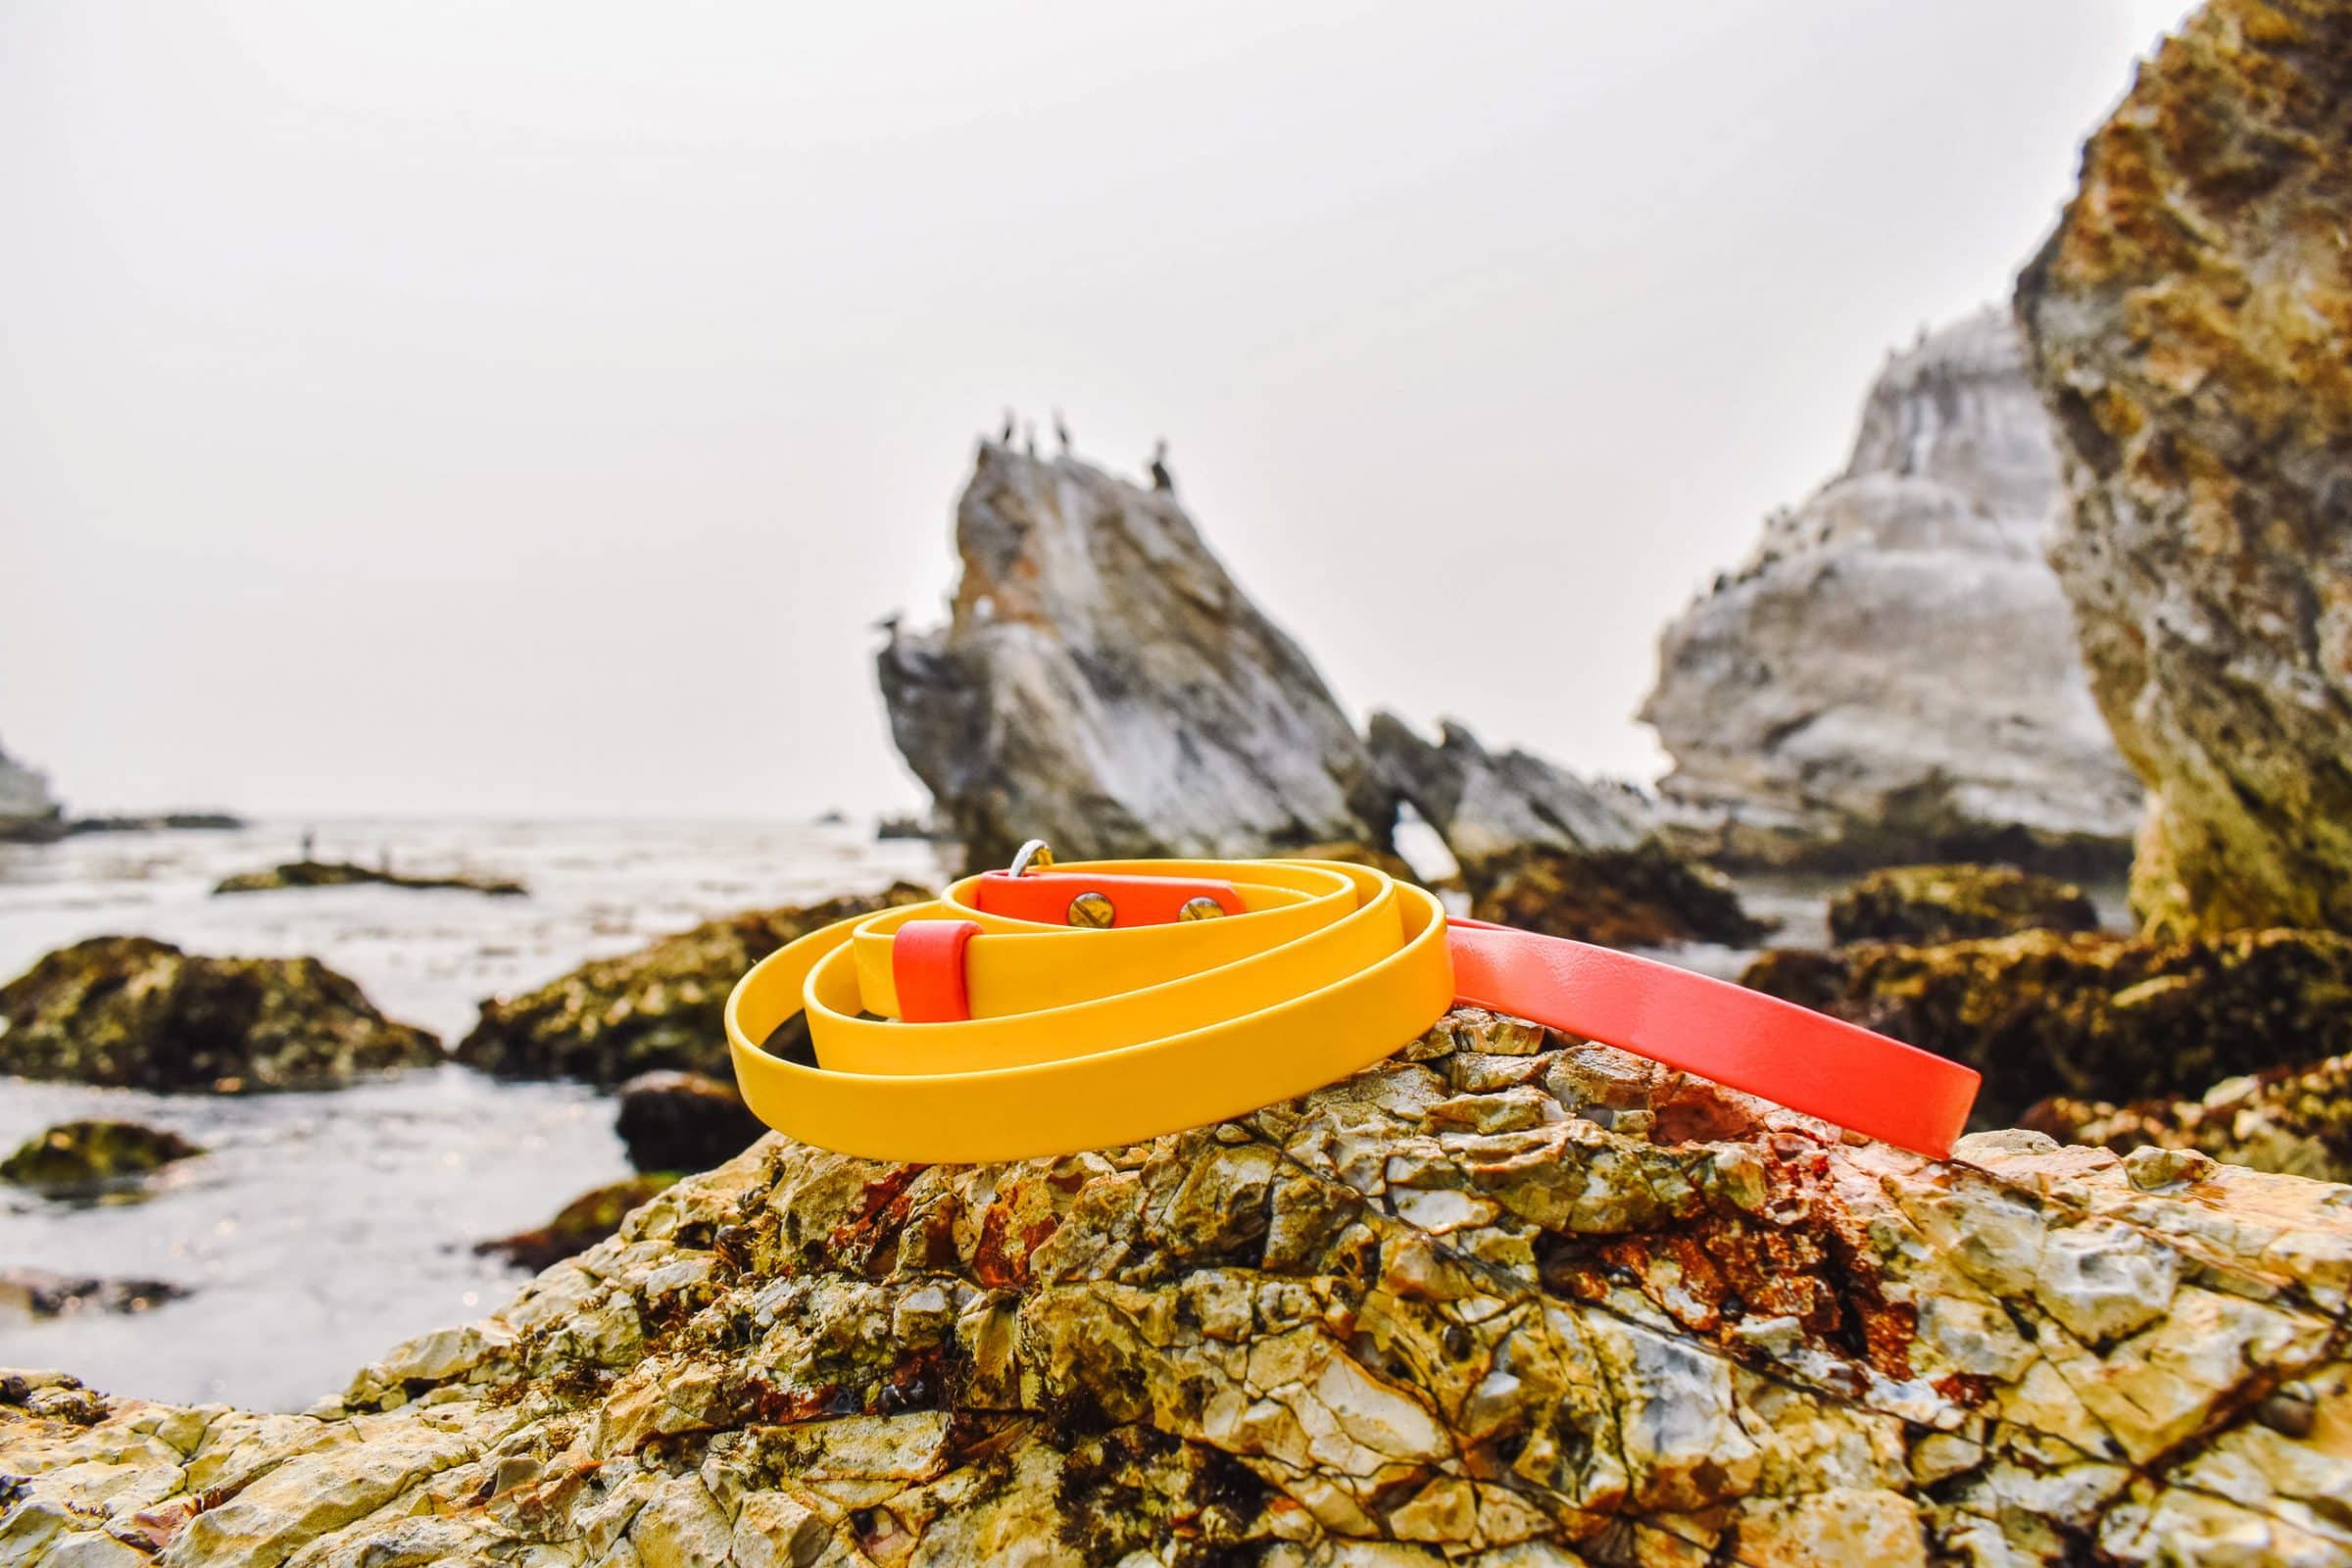 yellow and pink biothane slip dog leash slip lead at ocean waterproof